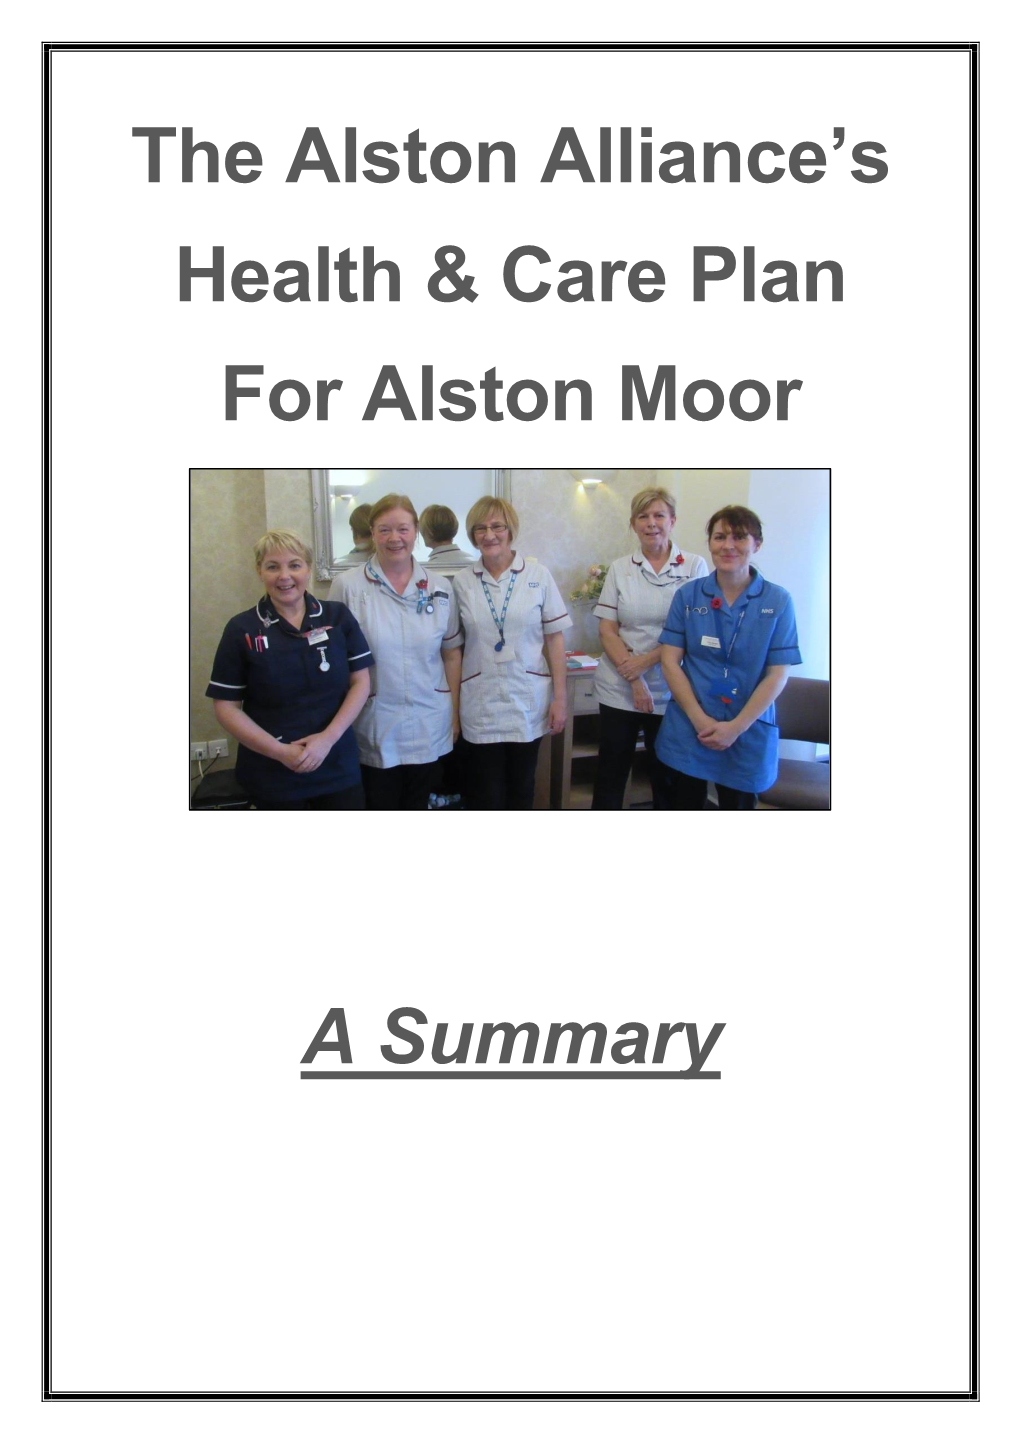 The Alston Alliance's Health & Care Plan for Alston Moor a Summary